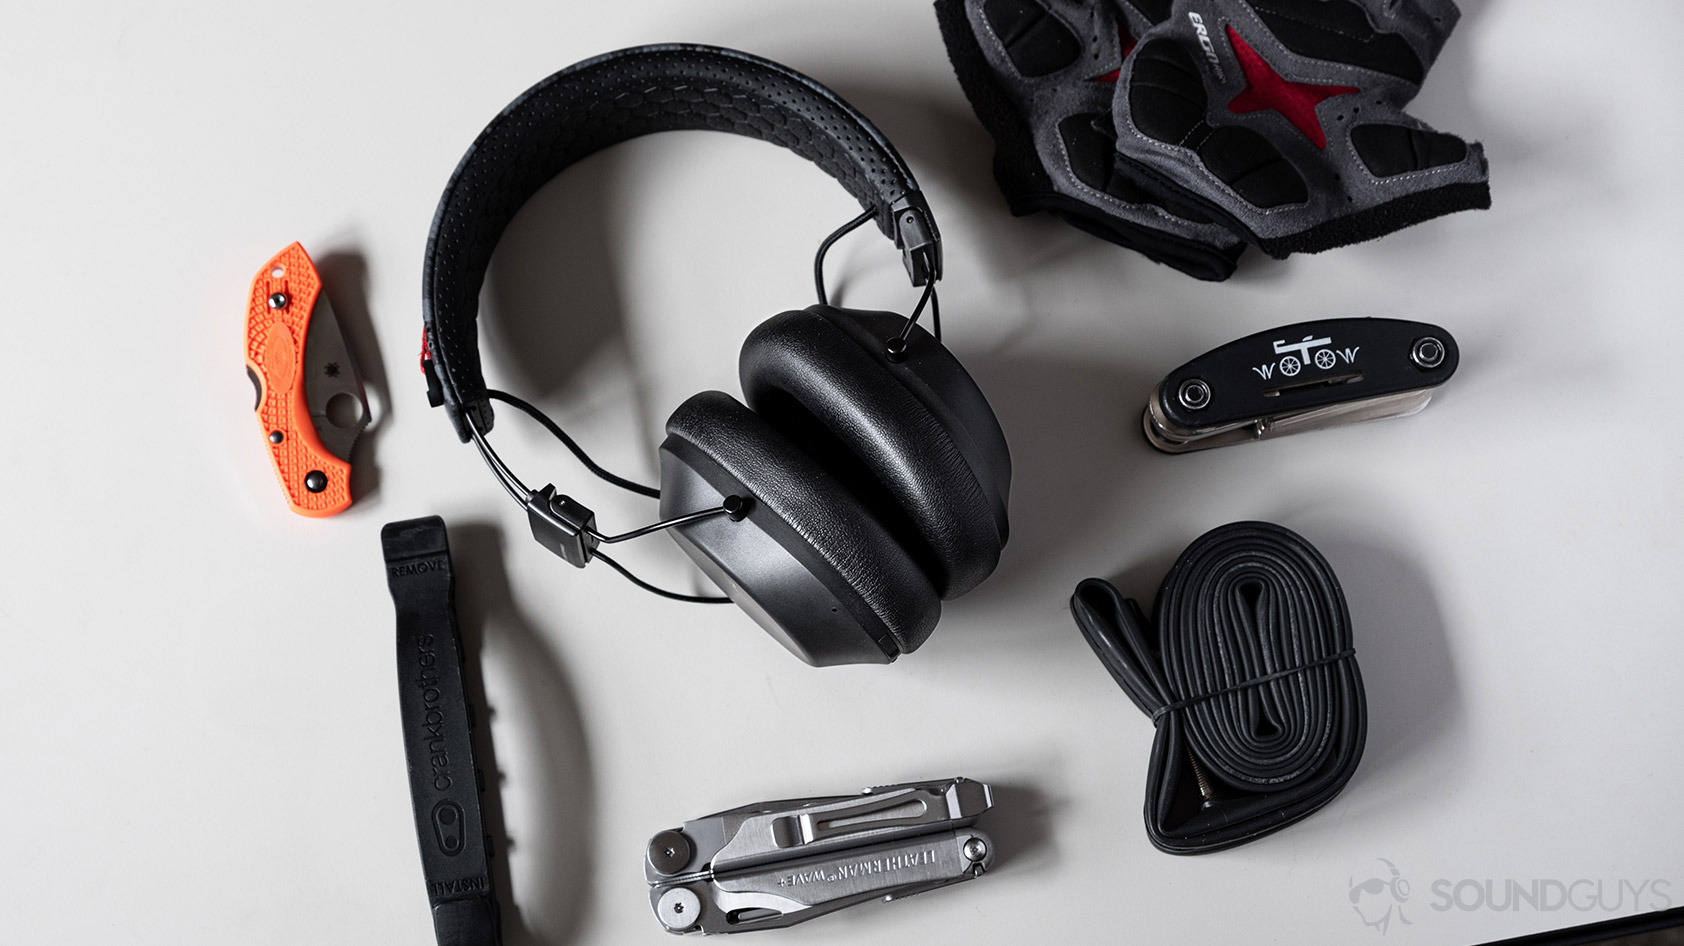 5 Reasons not to buy Bluetooth headphones - SoundGuys